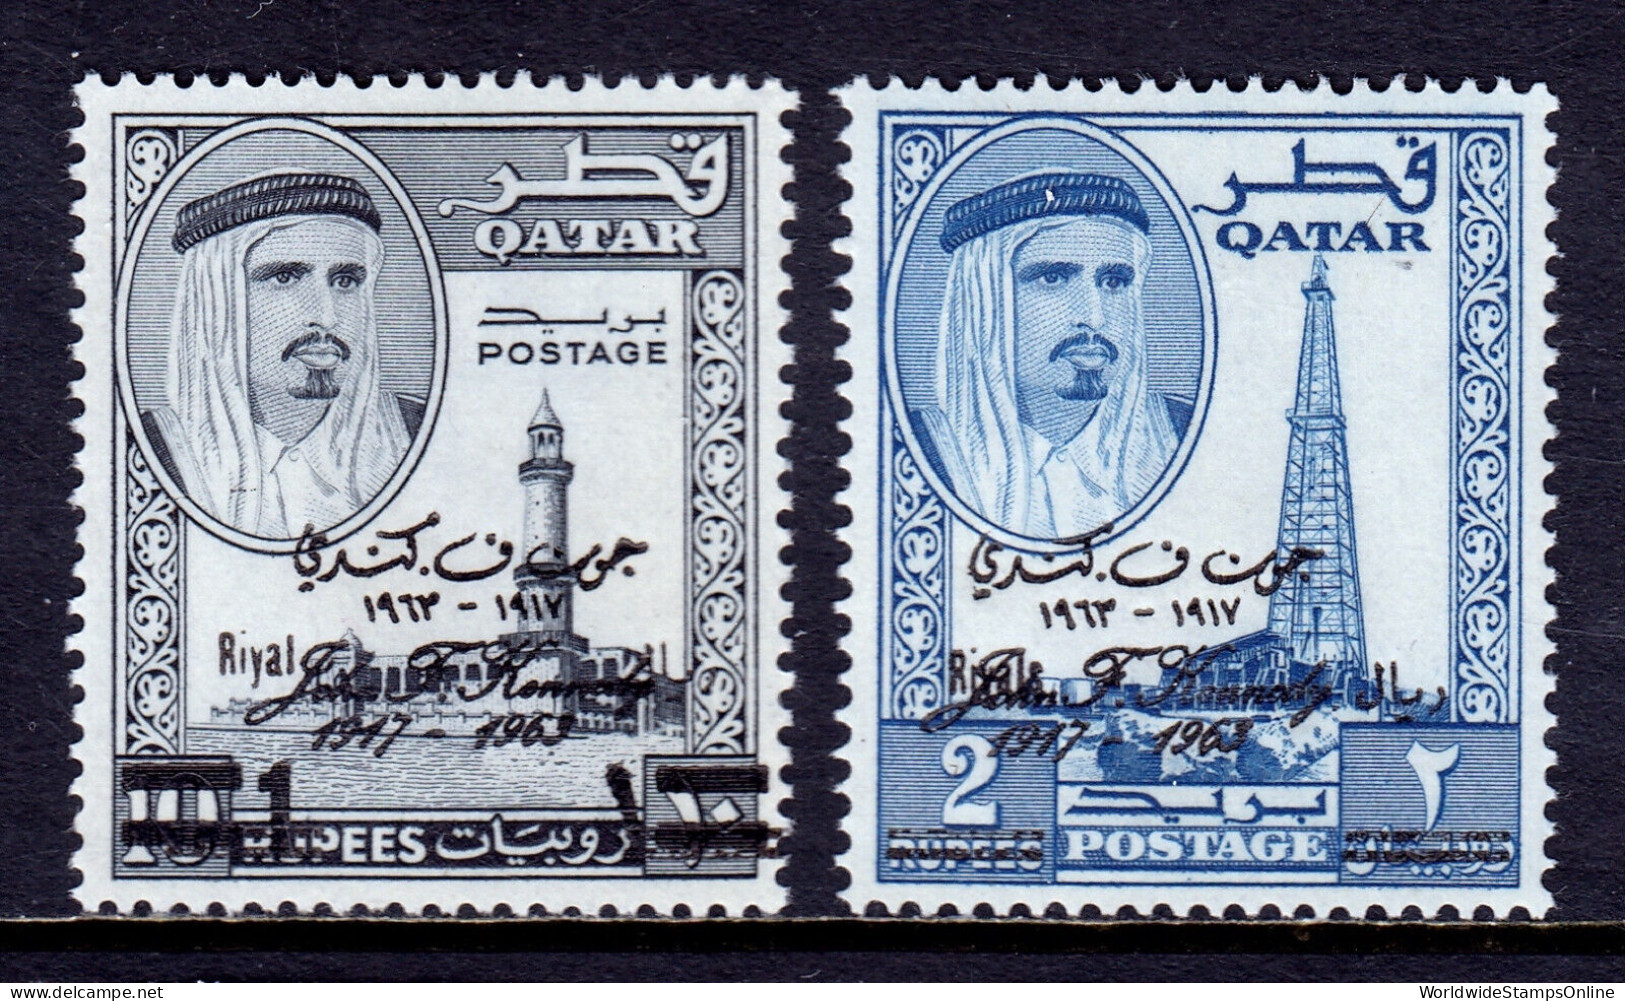 QATAR — SCOTT 111B, 111C — 1966 1r & 2r SURCHARGED JFK OVPTS — MLH - Qatar